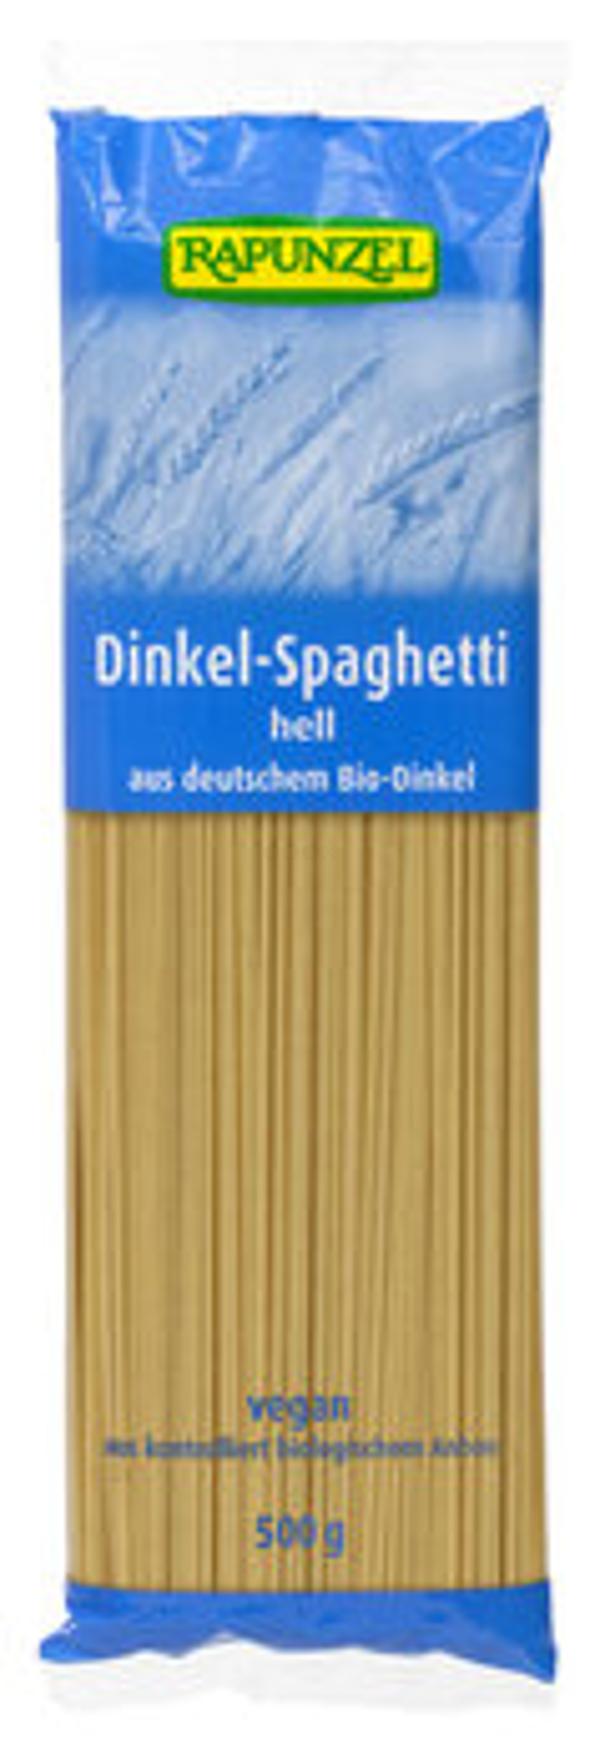 Produktfoto zu Dinkel-Spaghetti hell 500gr